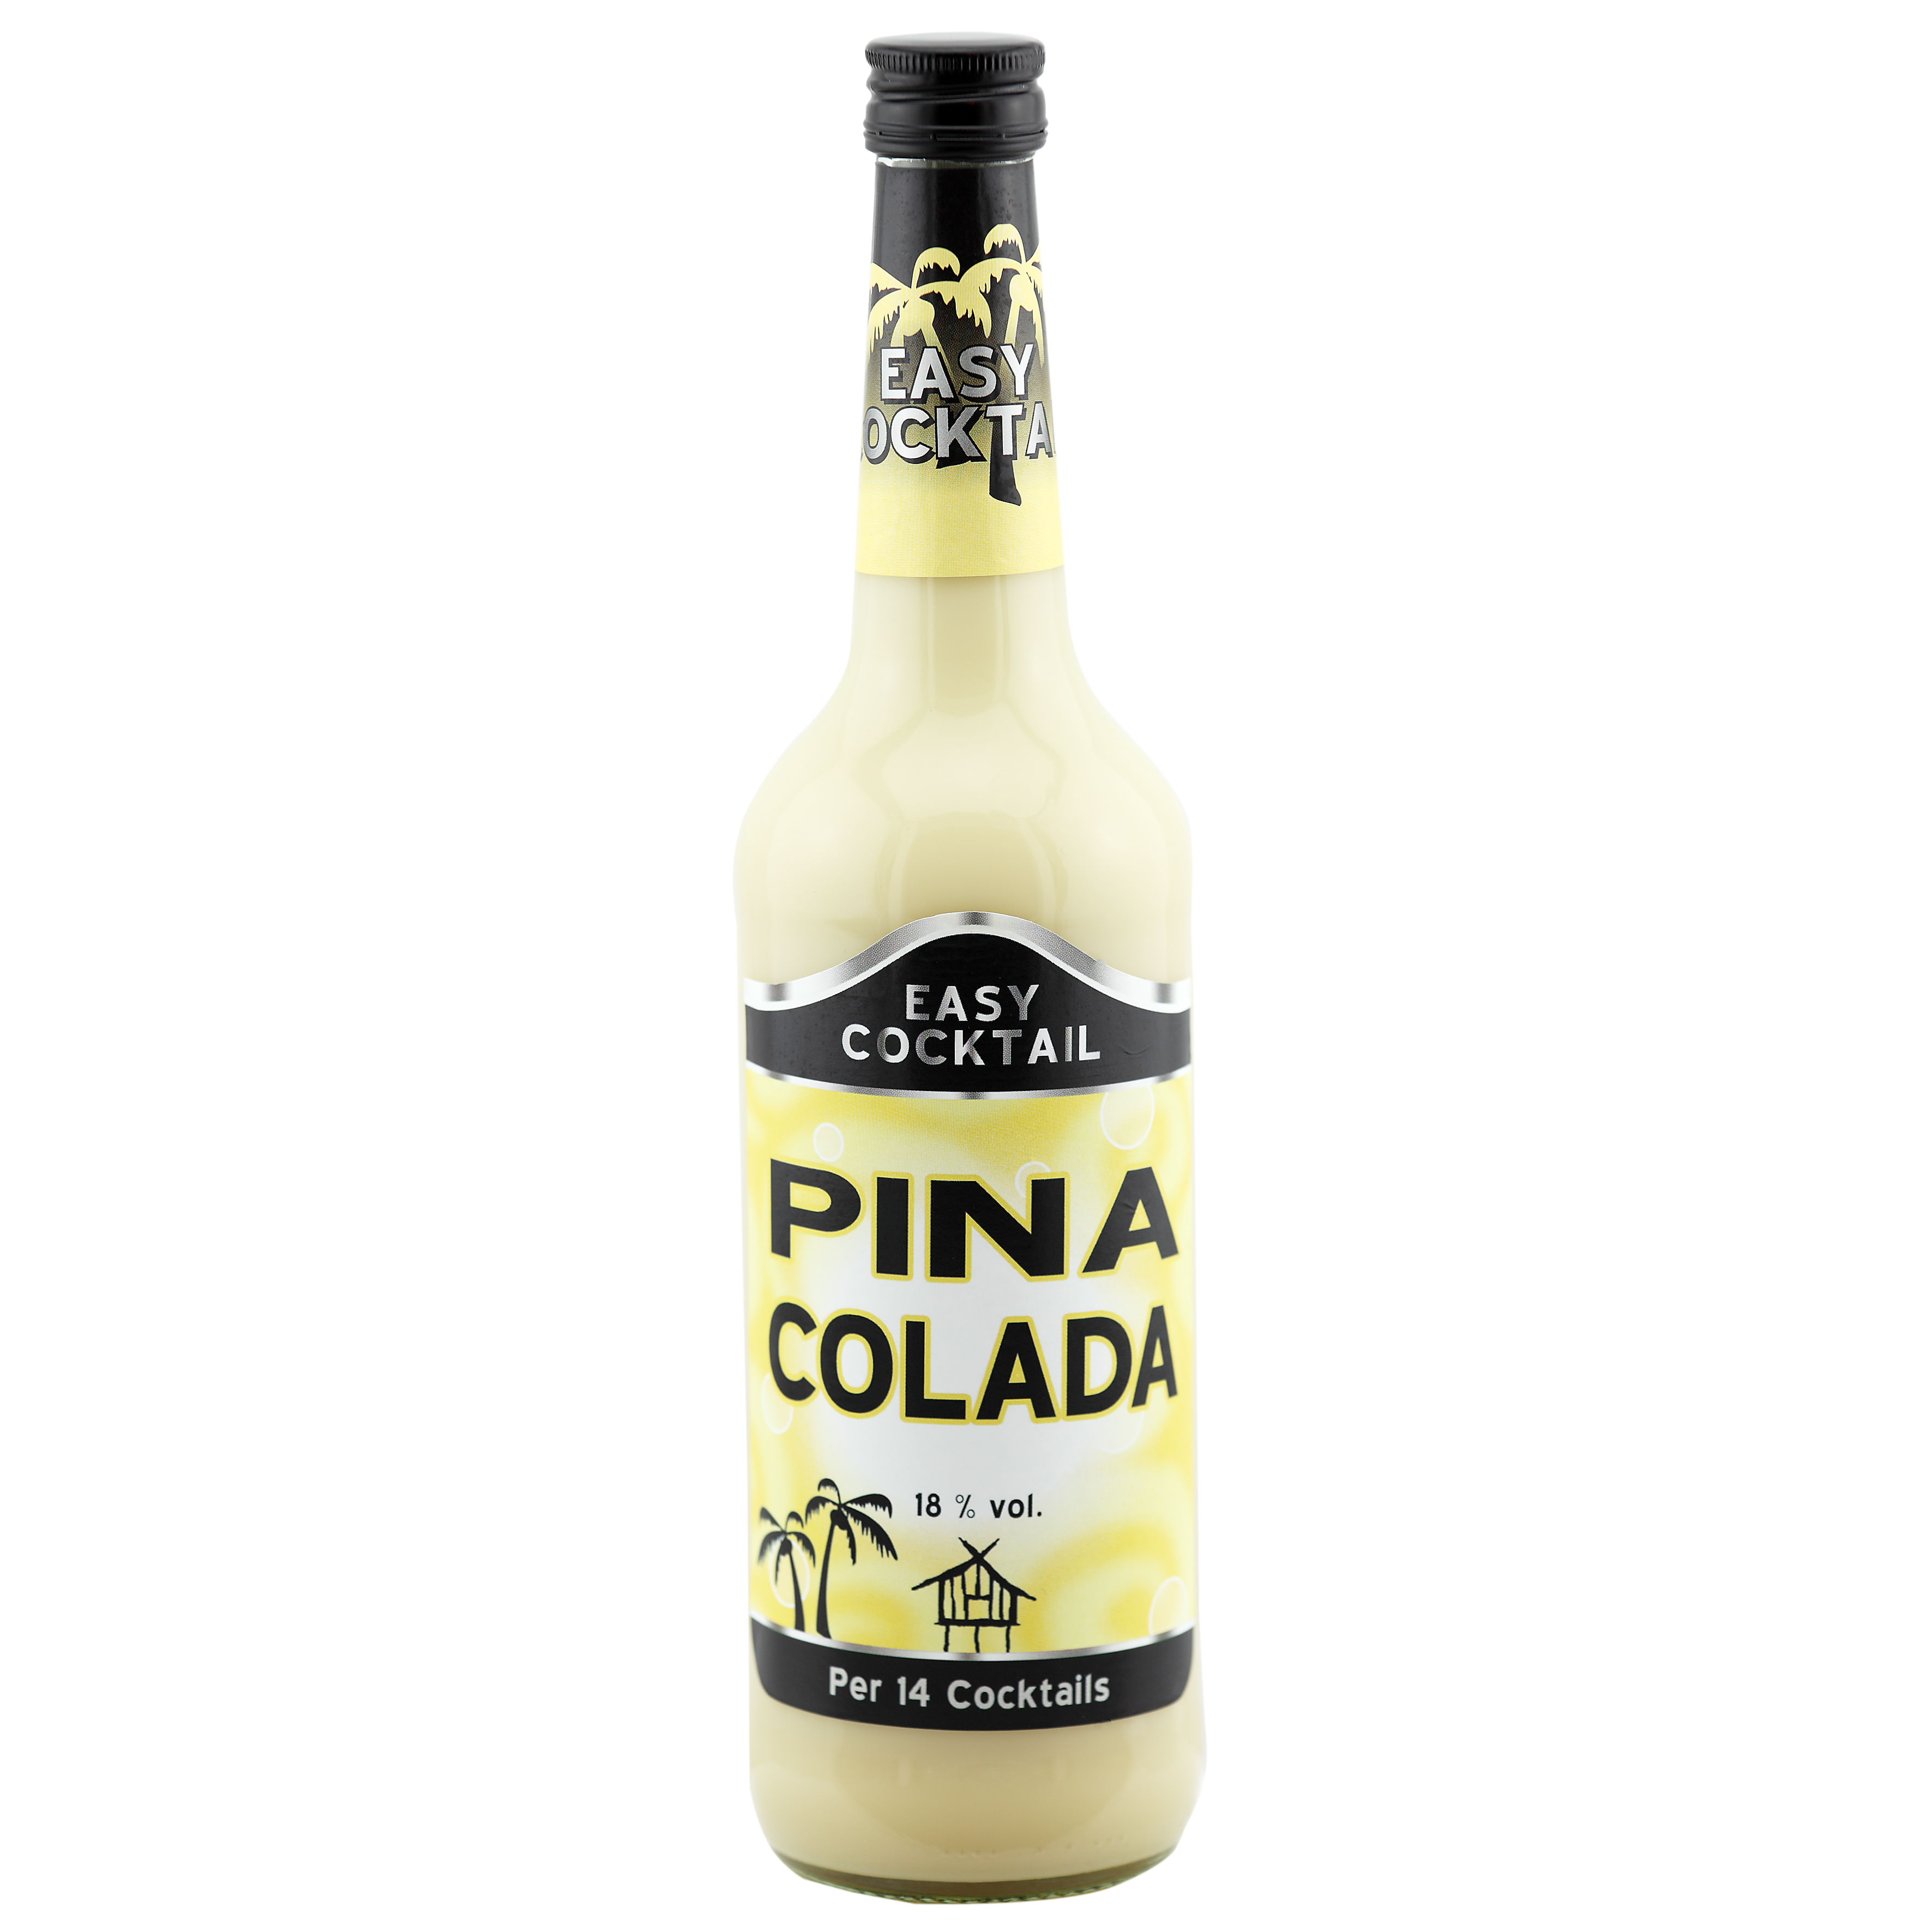 PINA COLADA / Fertigcocktail / 18% Vol. 0,7 ltr. / EASY COCKTAIL